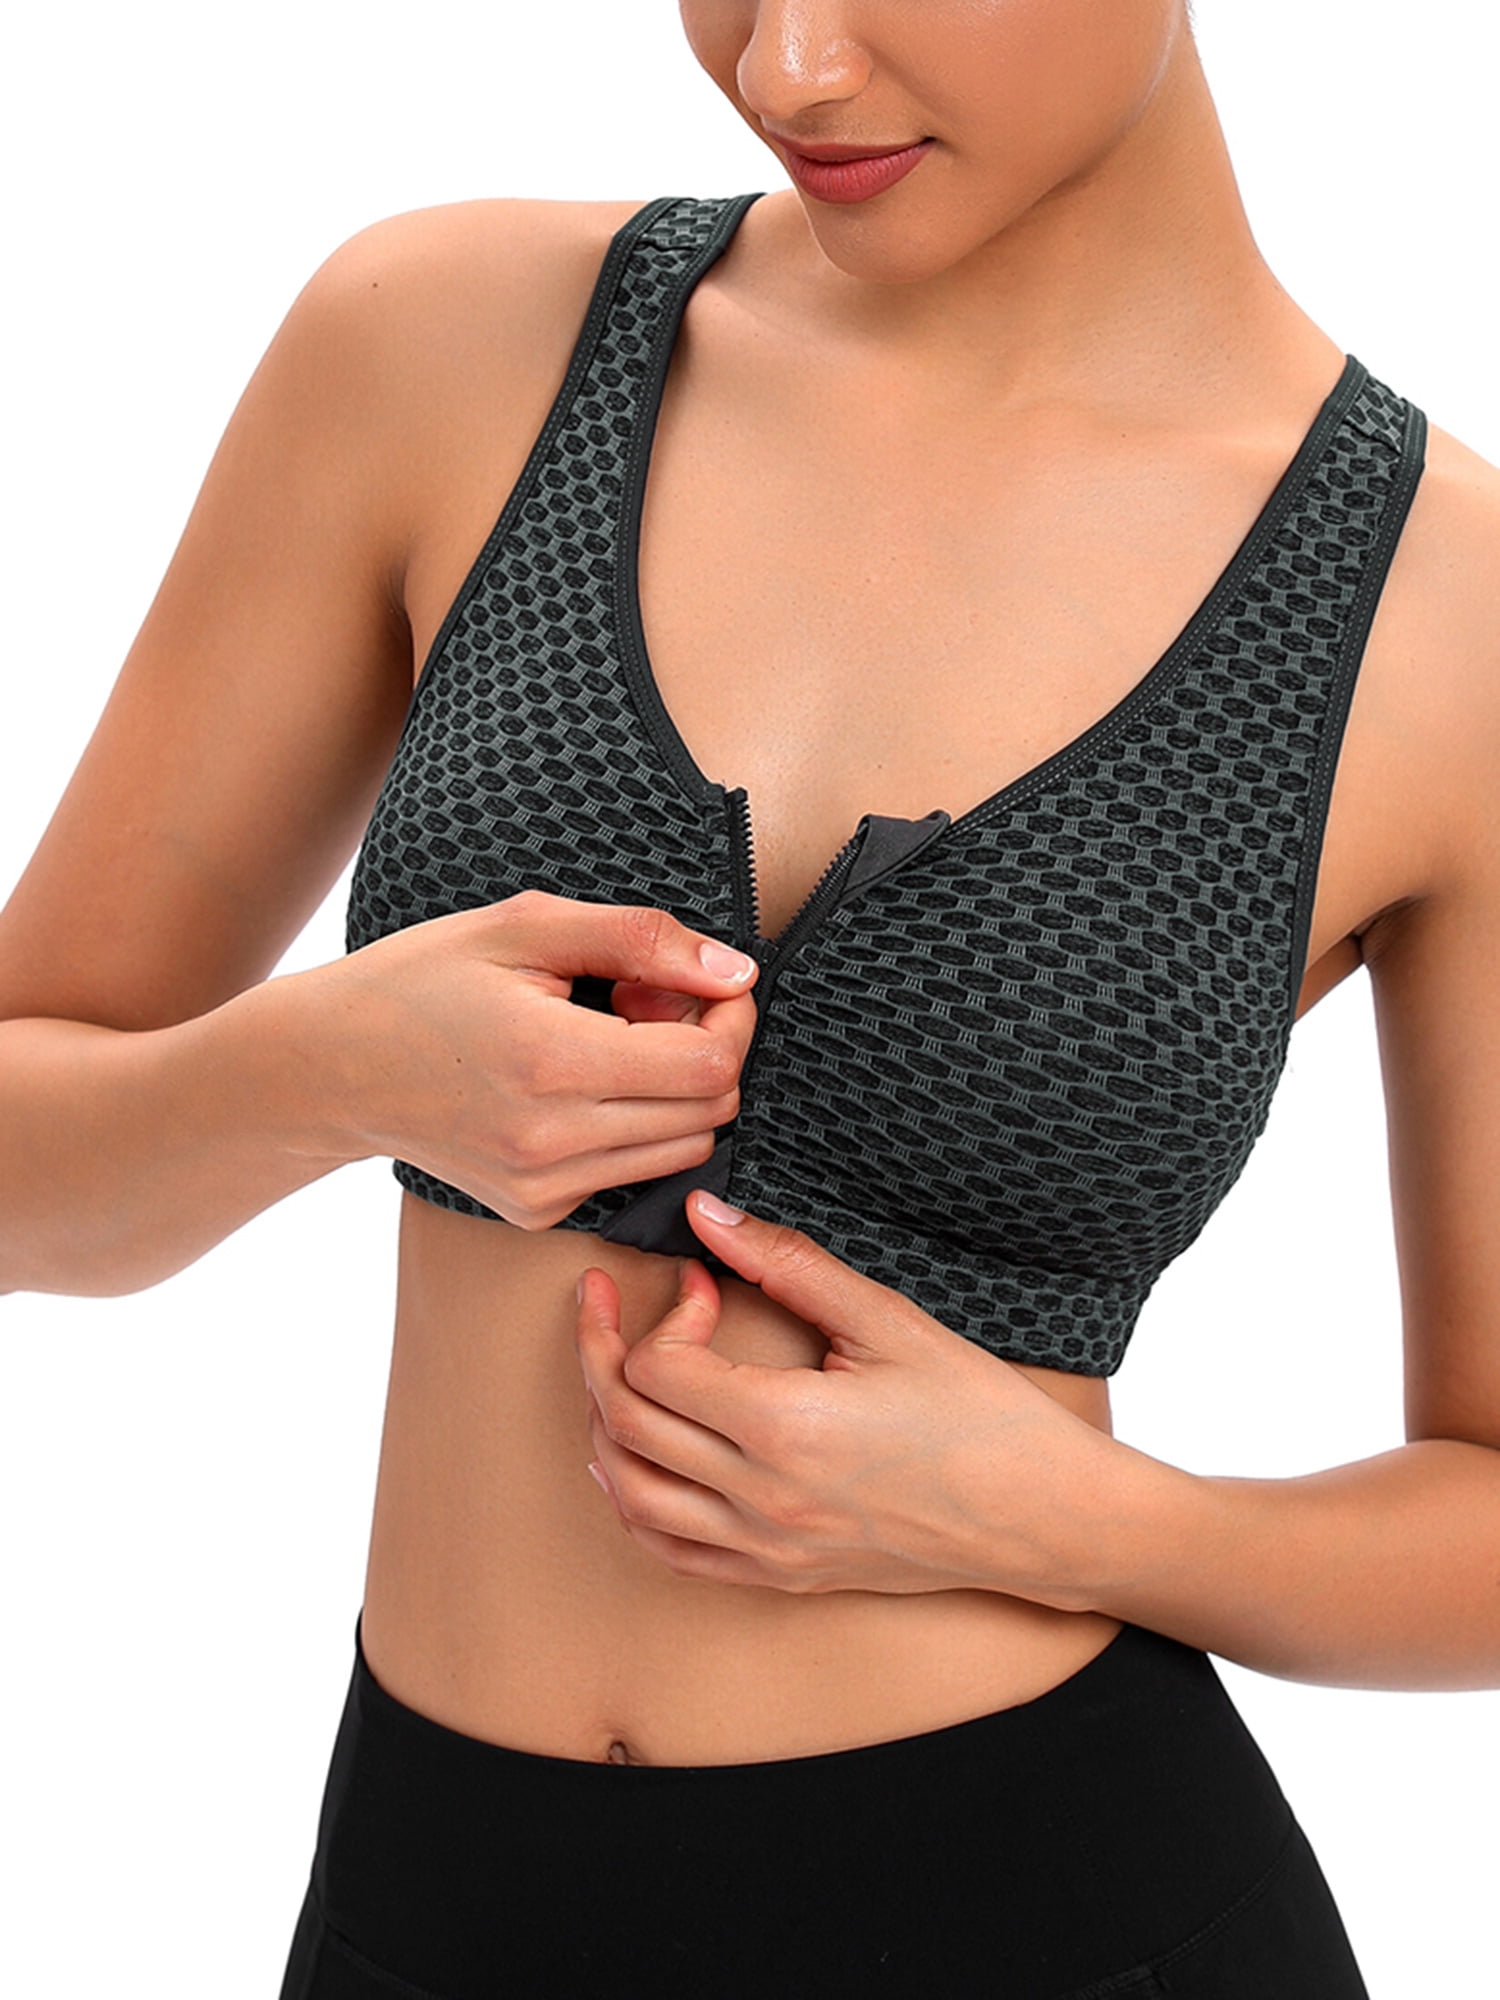 FUTATA Women's Wireless Post Surgery Bra Front Zipper Seamless